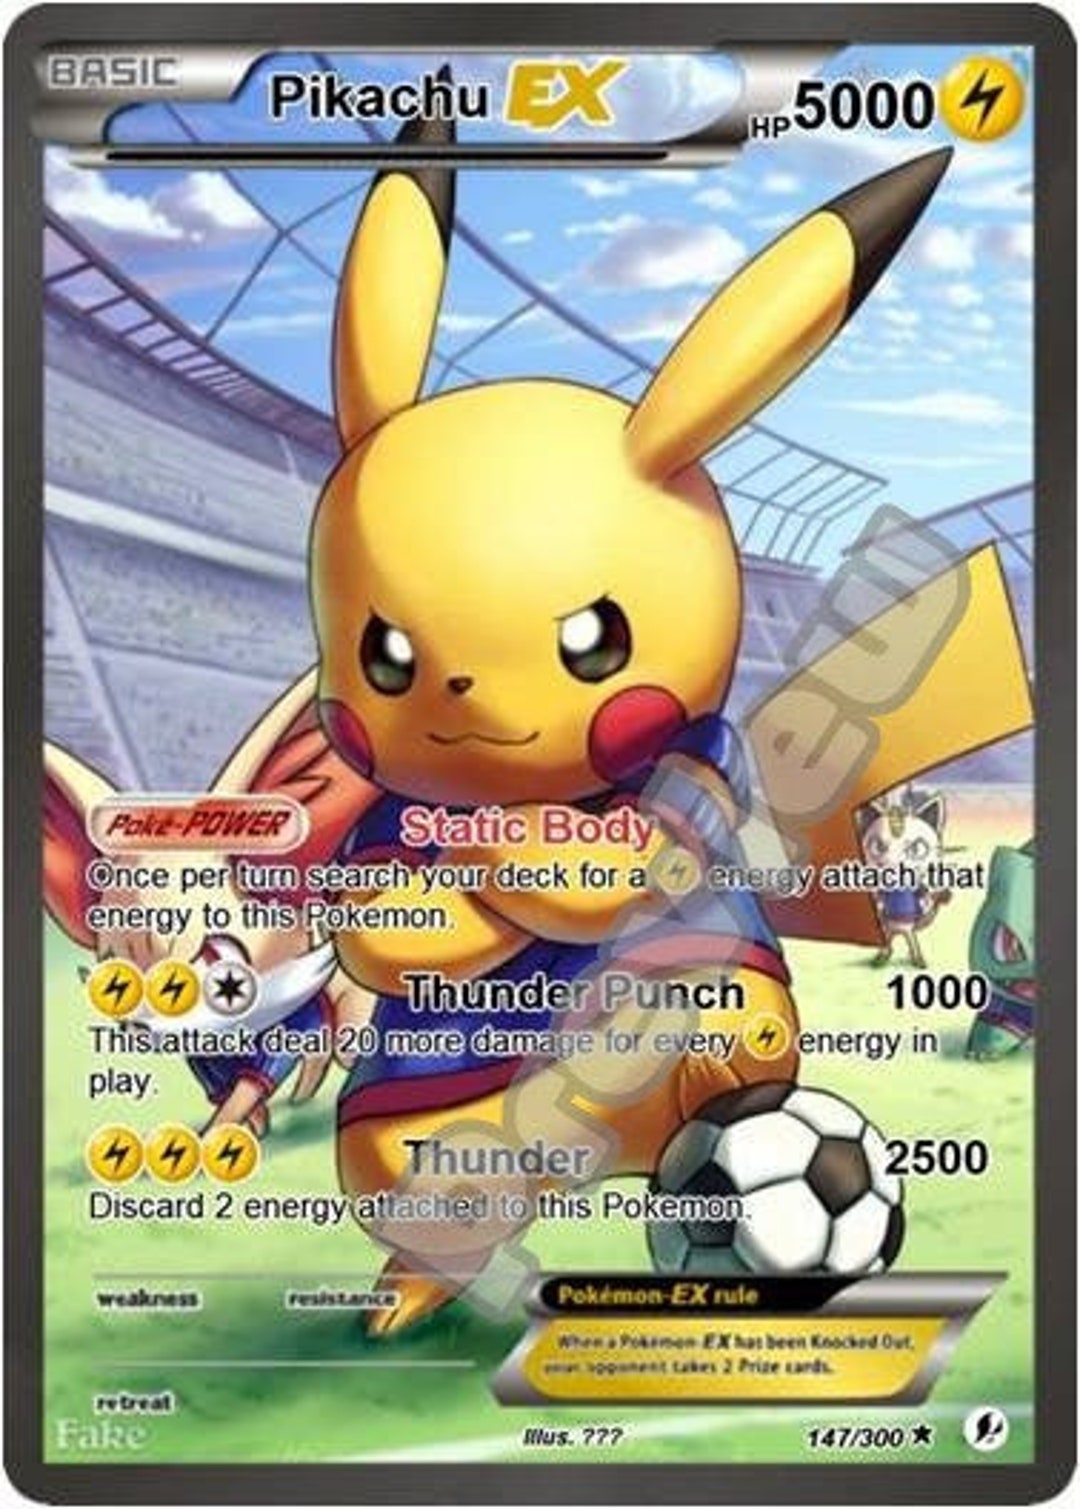 Pikachu Gx Gmax Vmax Gigantamax Ex Pokemon Card Etsy